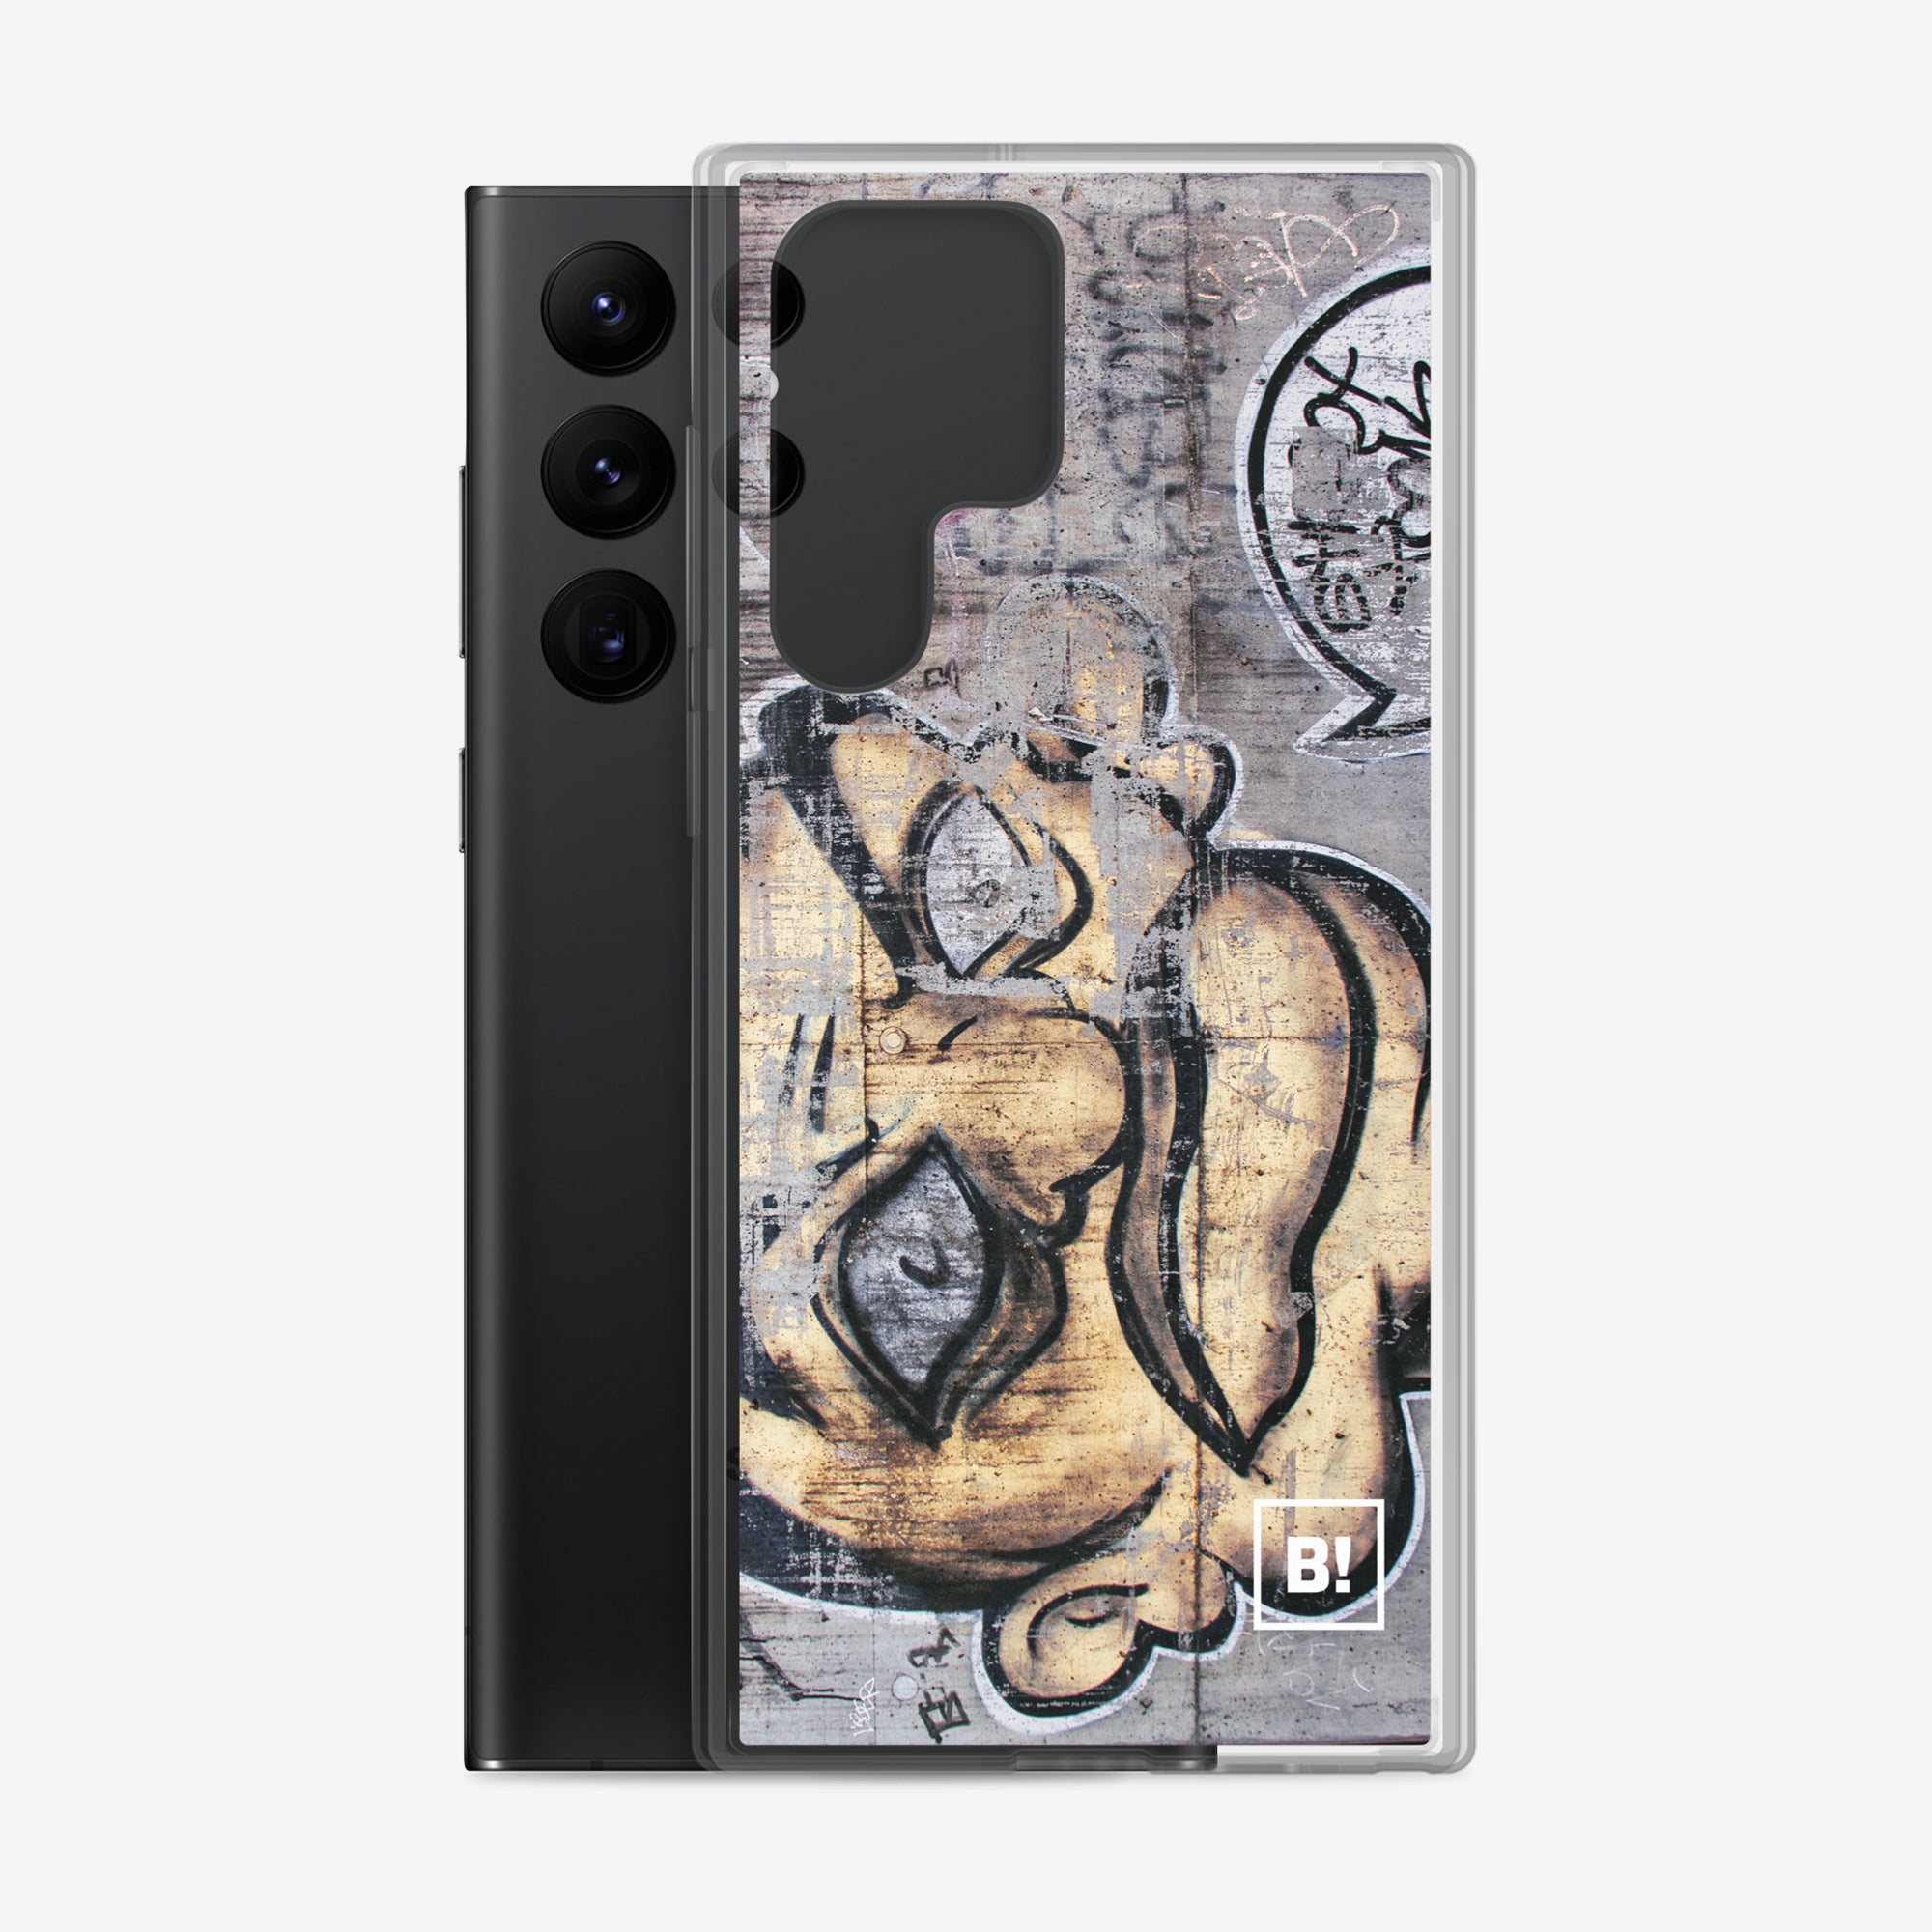 Binspired Shoot Urban Art Samsung Galaxy s22 Ultra Case with Phone